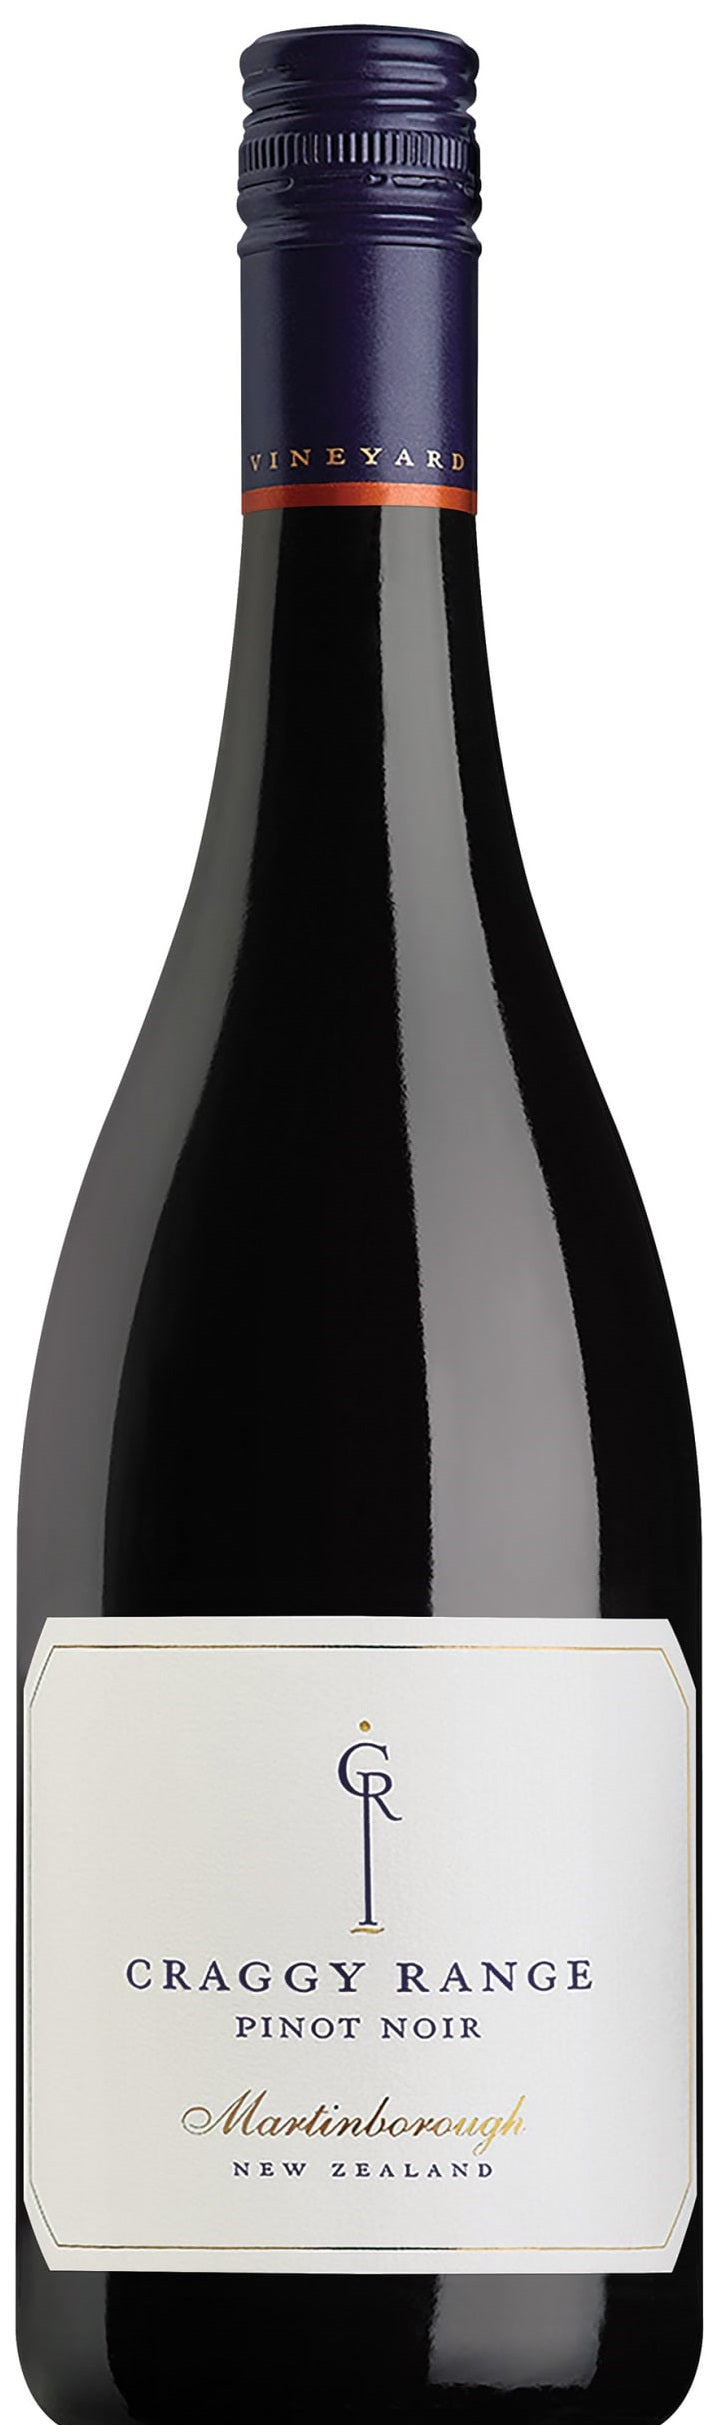 Craggy Range Pinot Noir Martinborough 2016